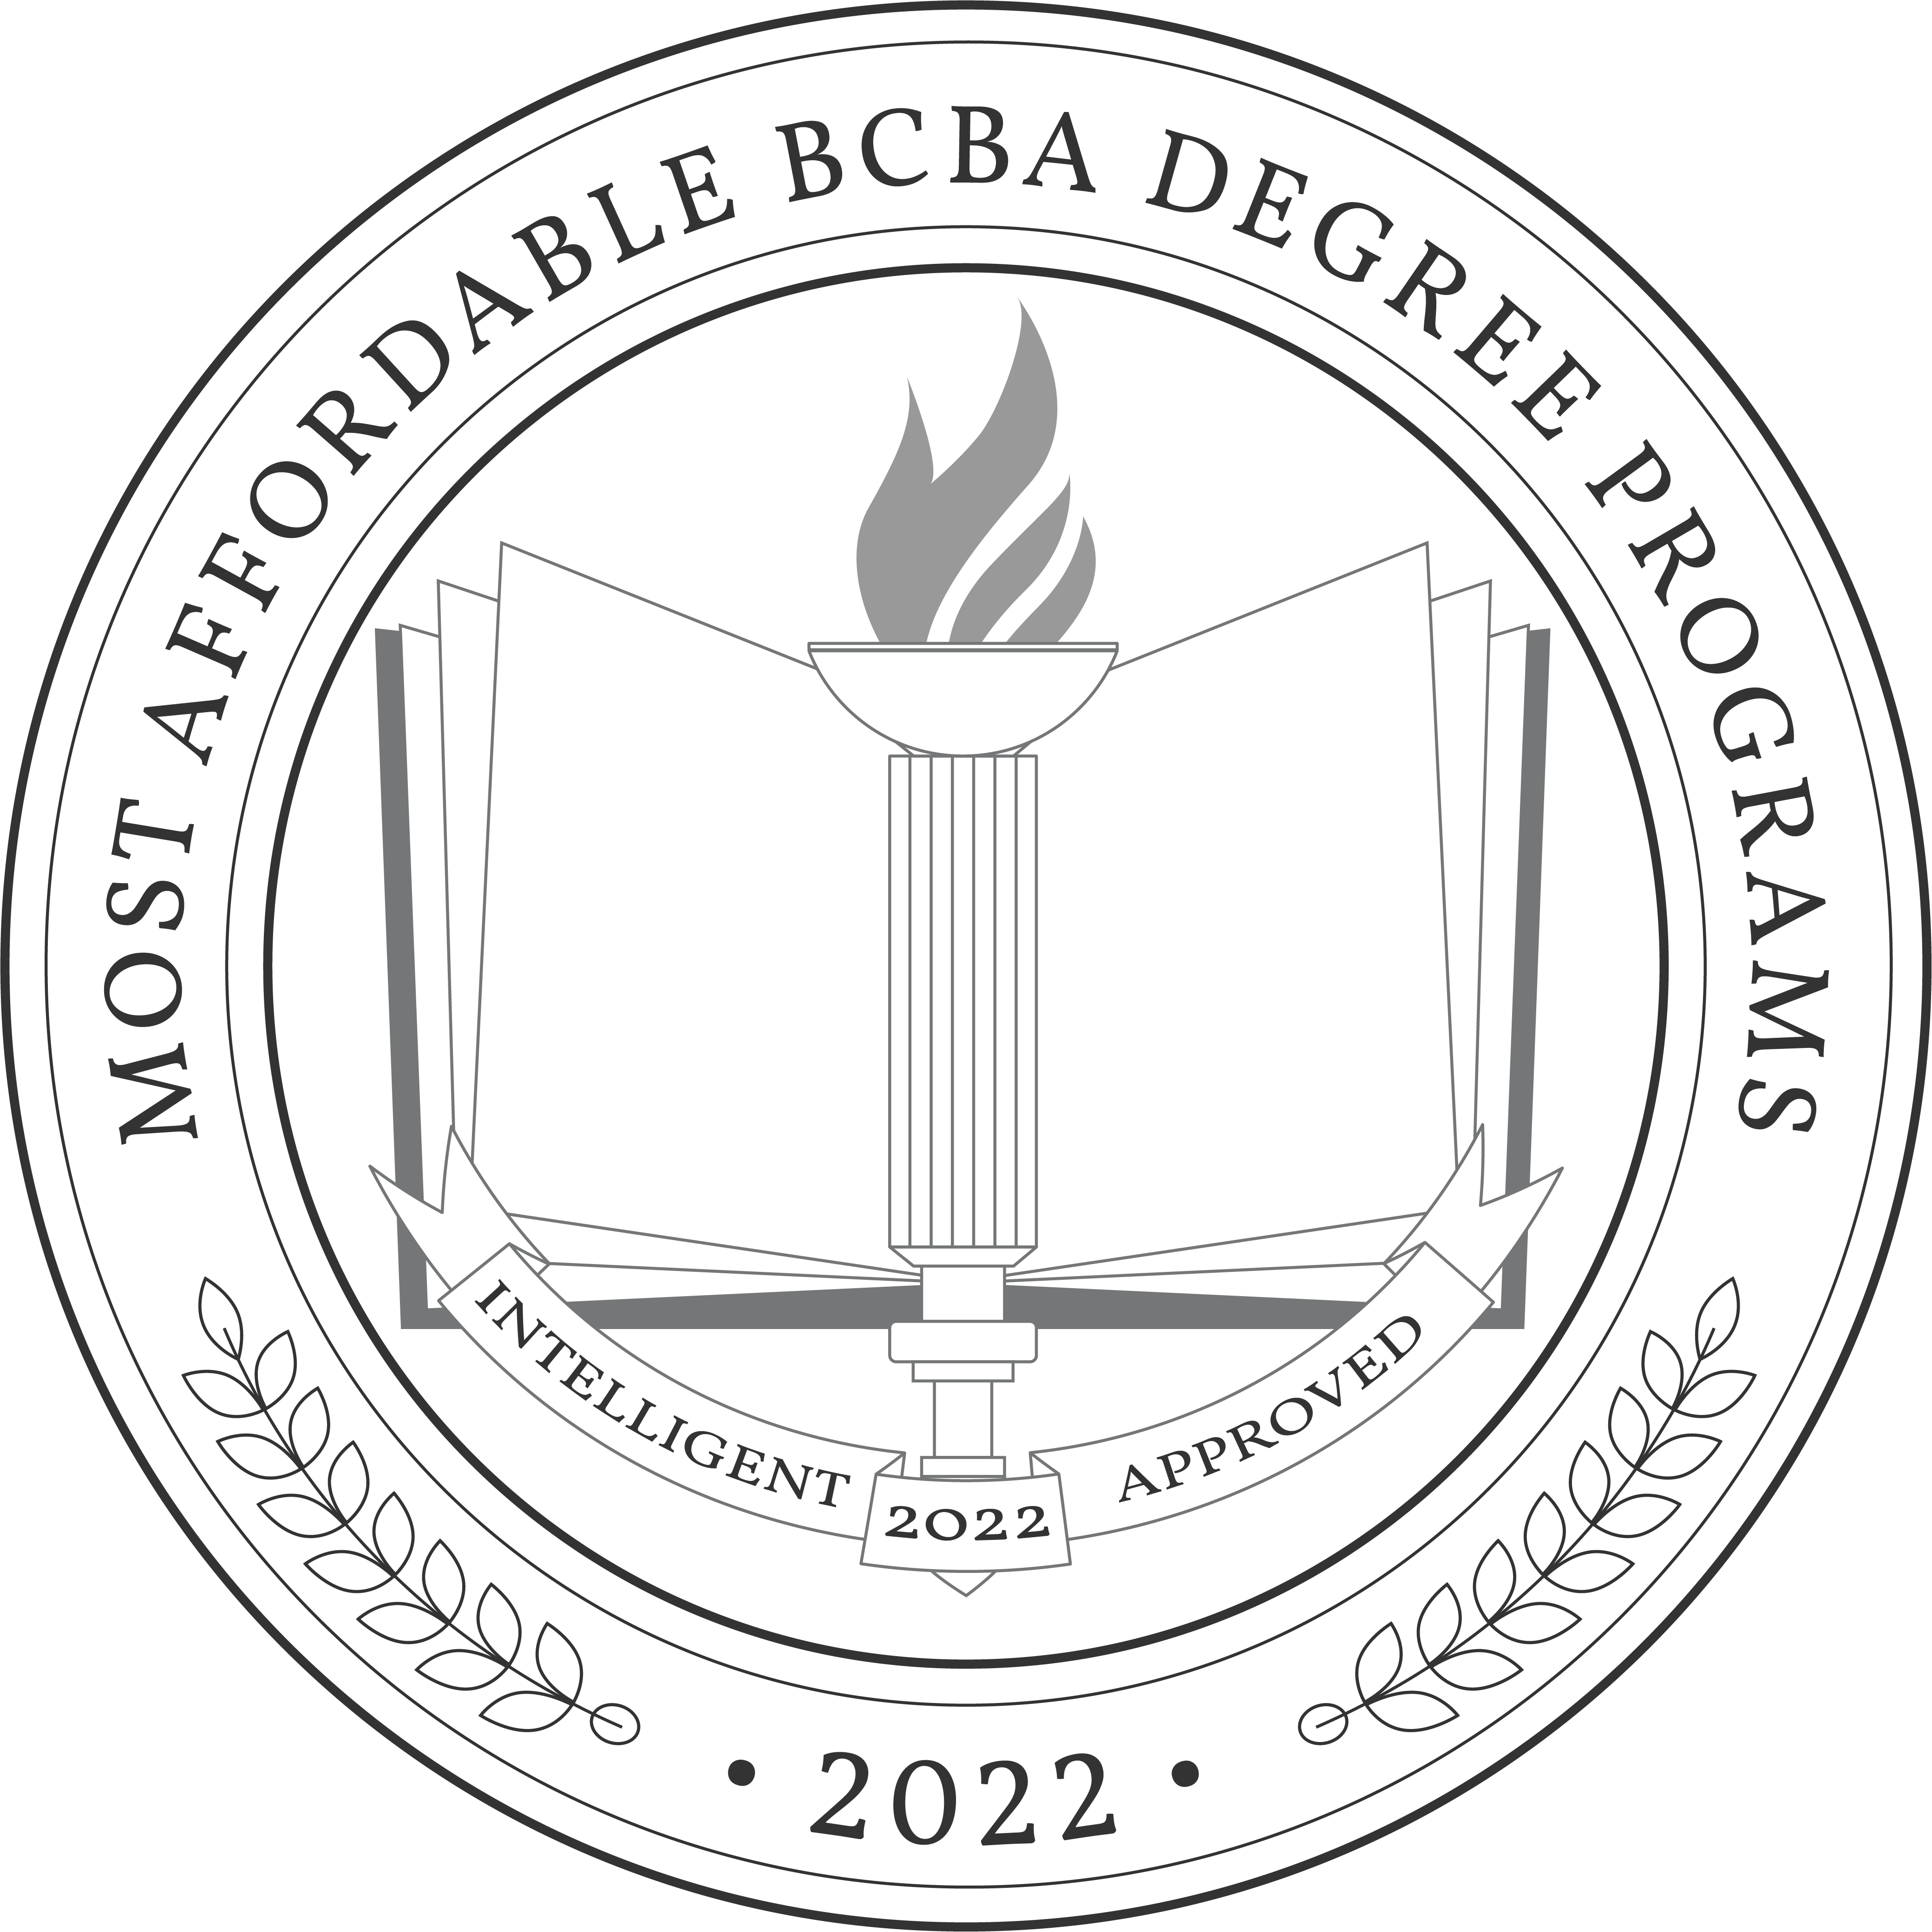 Most-Affordable-BCBA-Degree-Programs-Badge.png